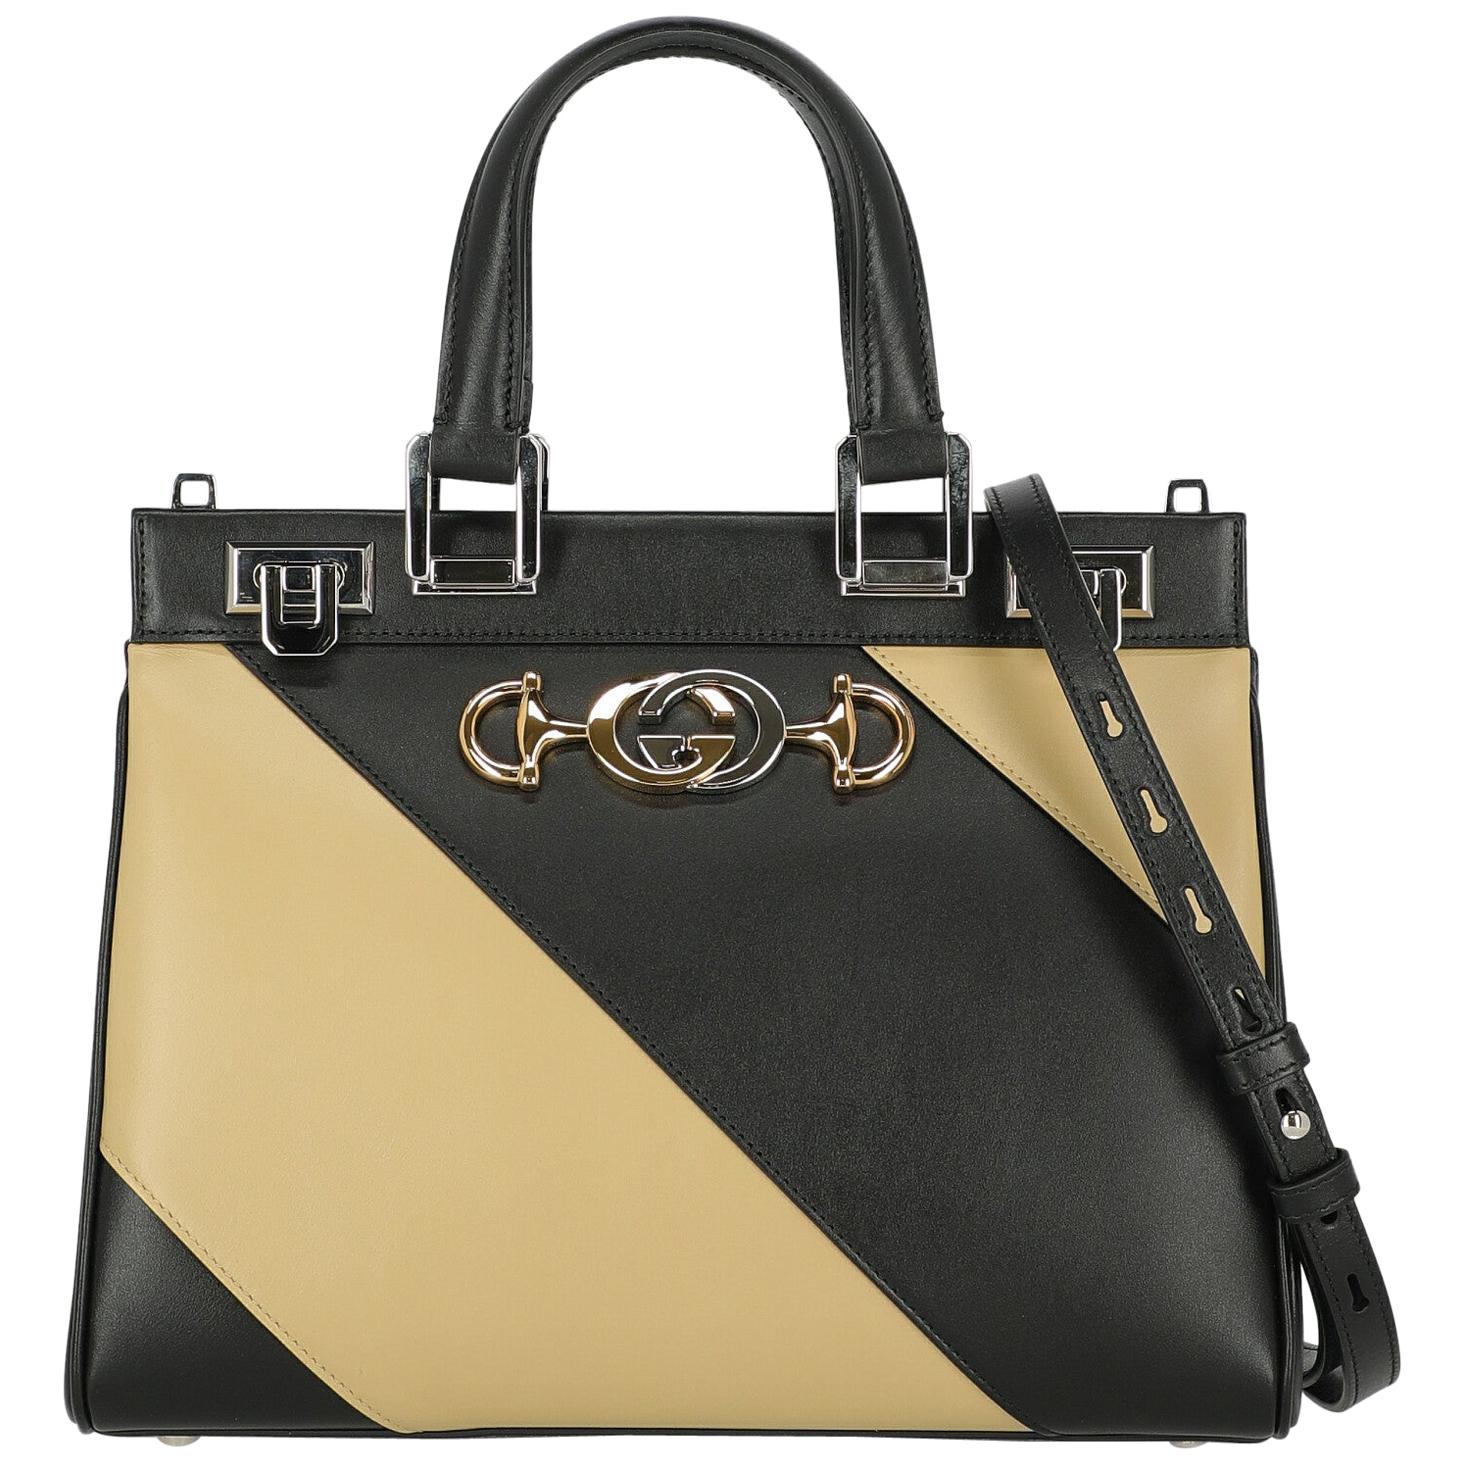 Gucci Women's Handbag Zumi Beige/Black Leather For Sale